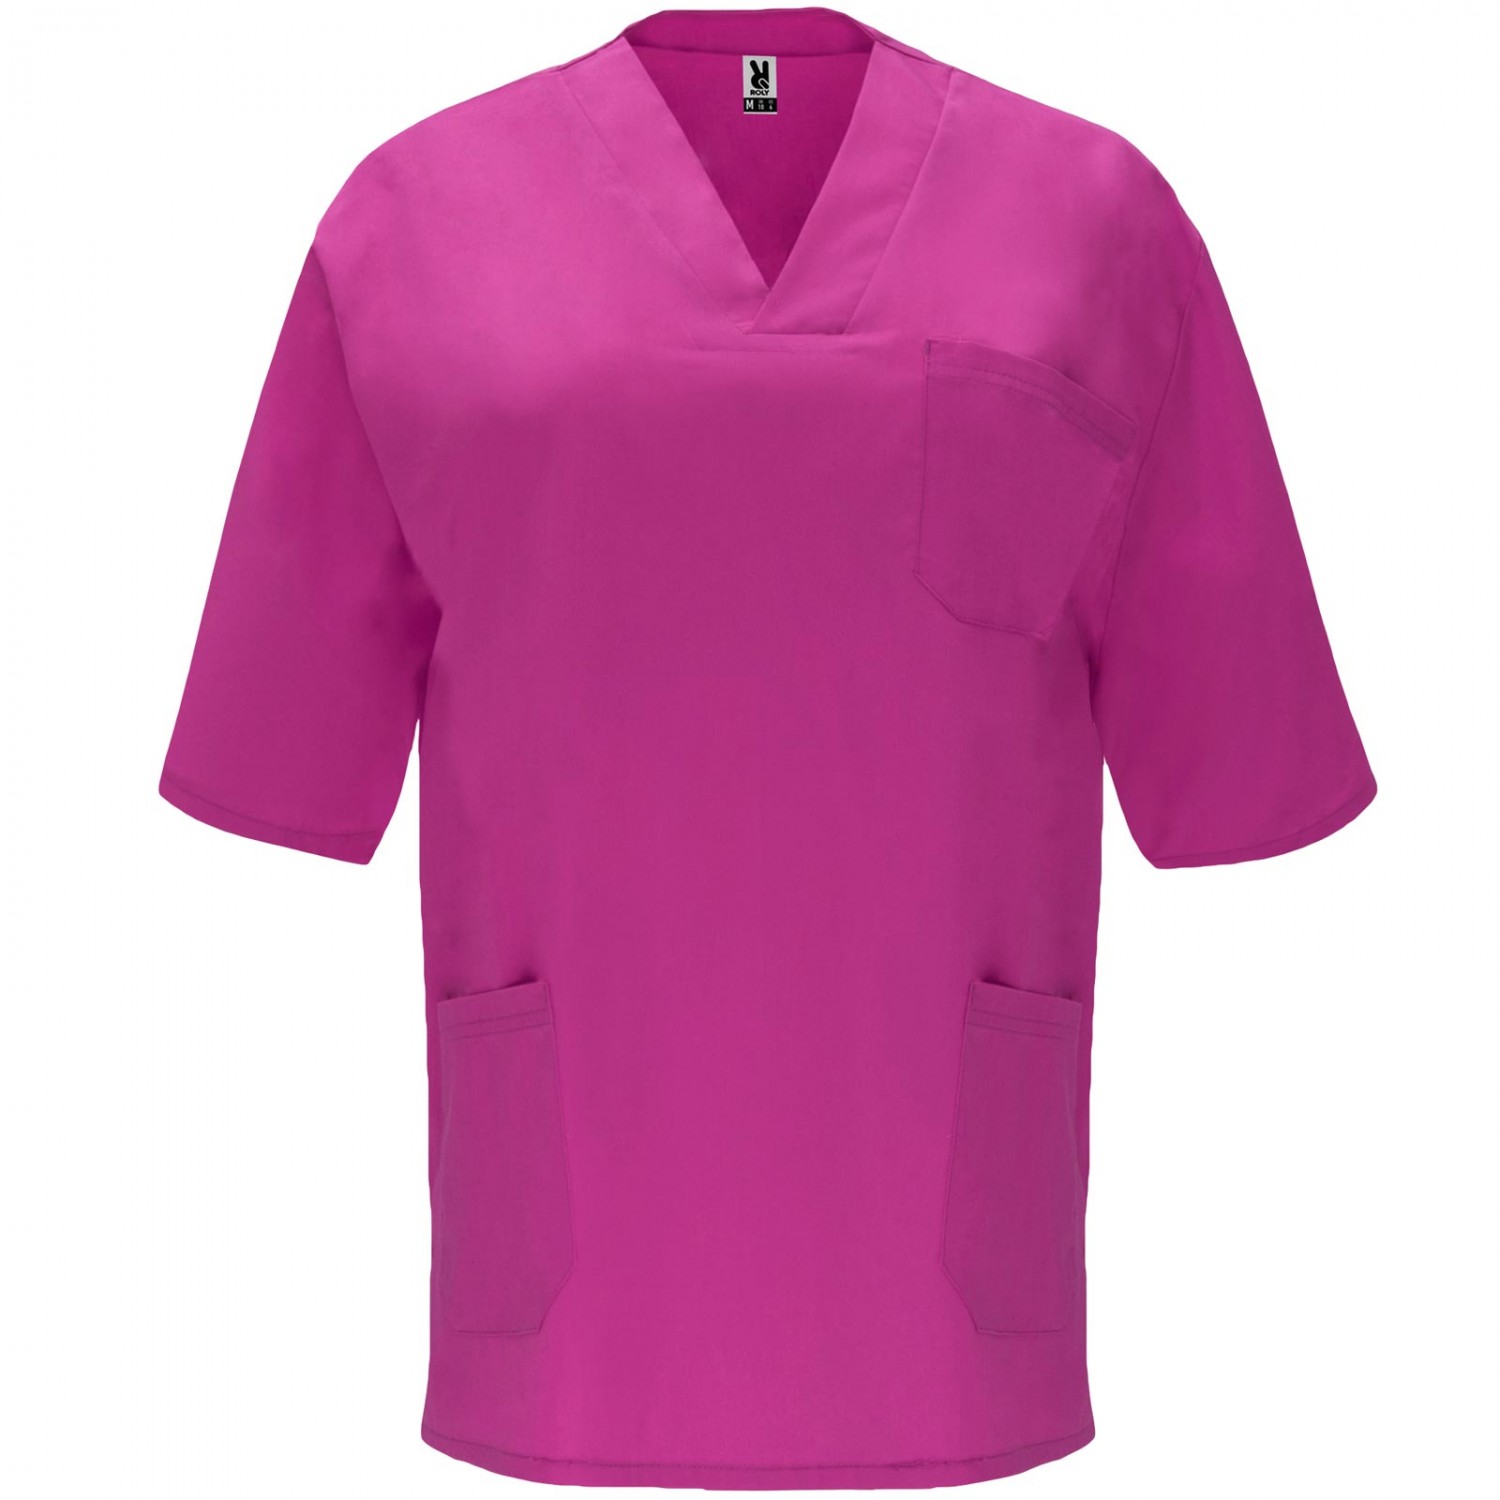 Schlupfkasack Medizin Pflege Unisex Hemd Jacke (Farbe: violett Größe: L)